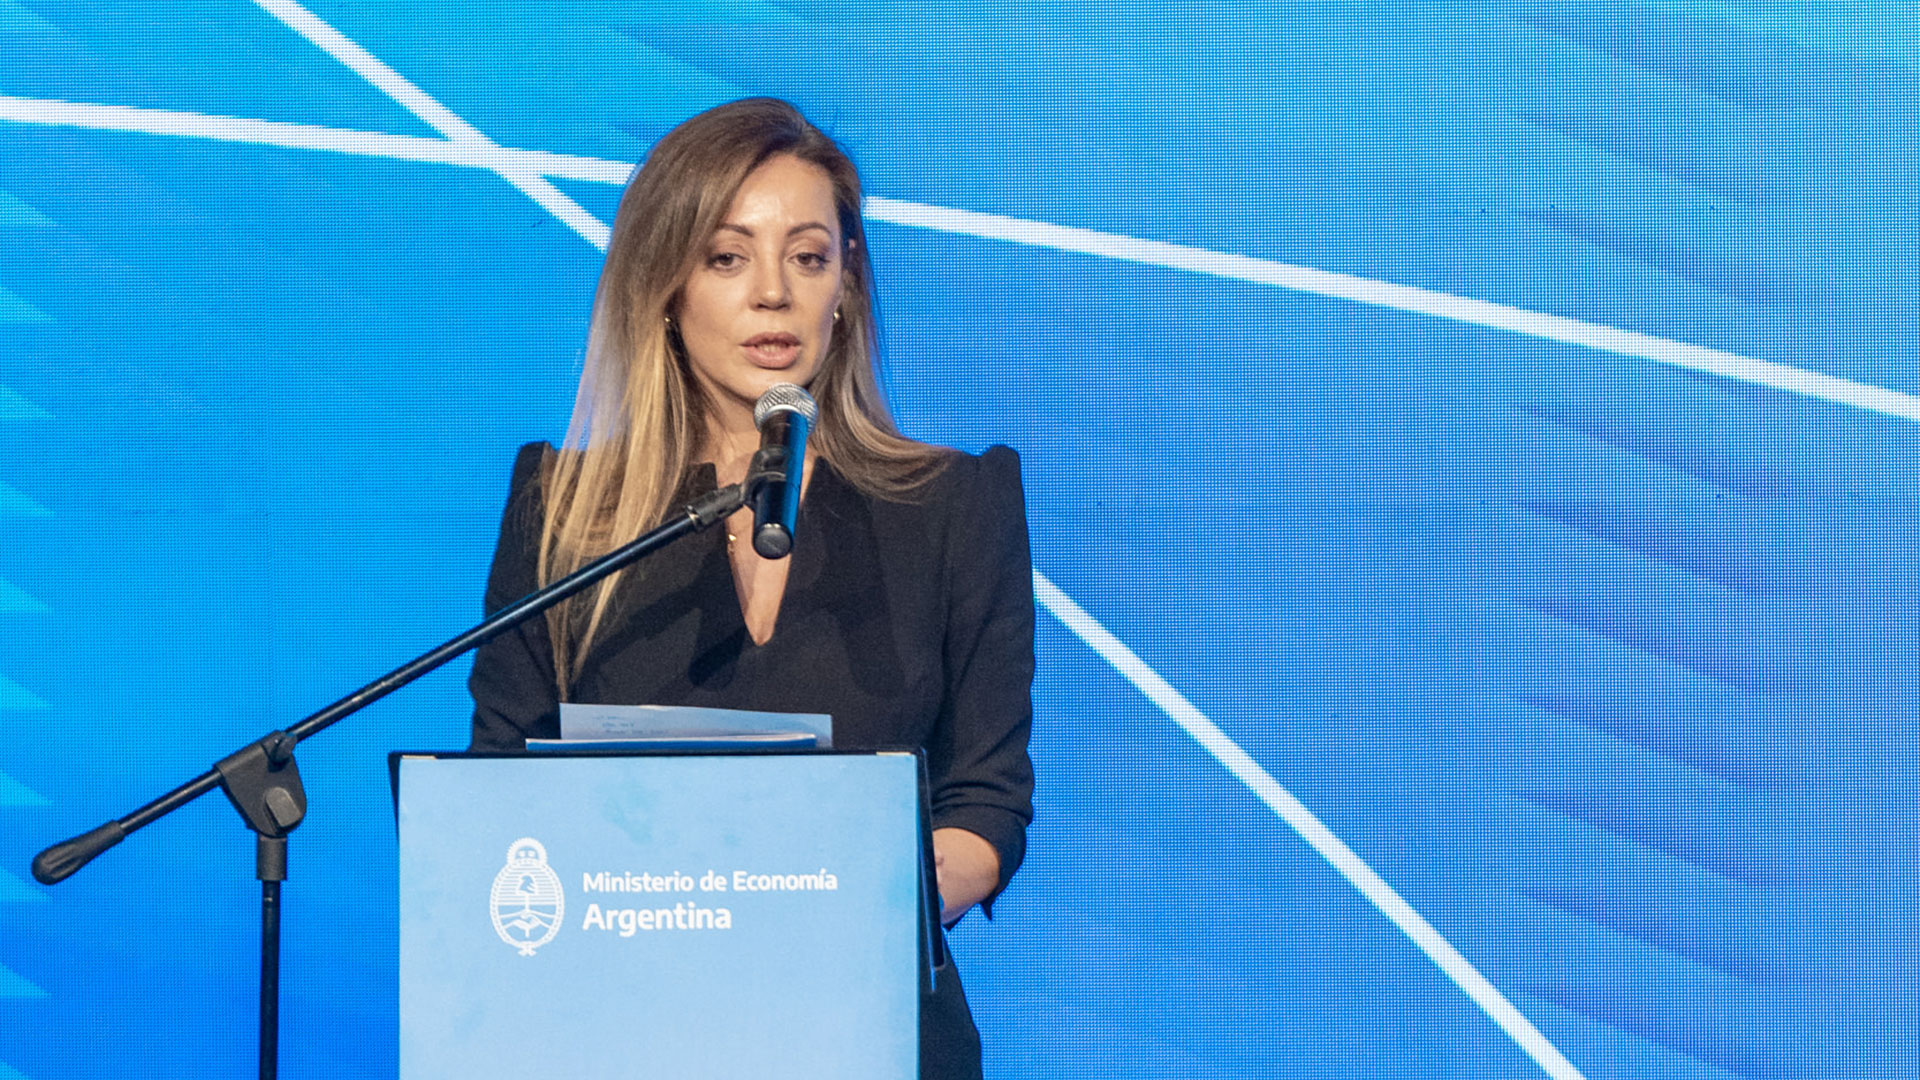 Flavia Royón - Secretary of Energy in cover format